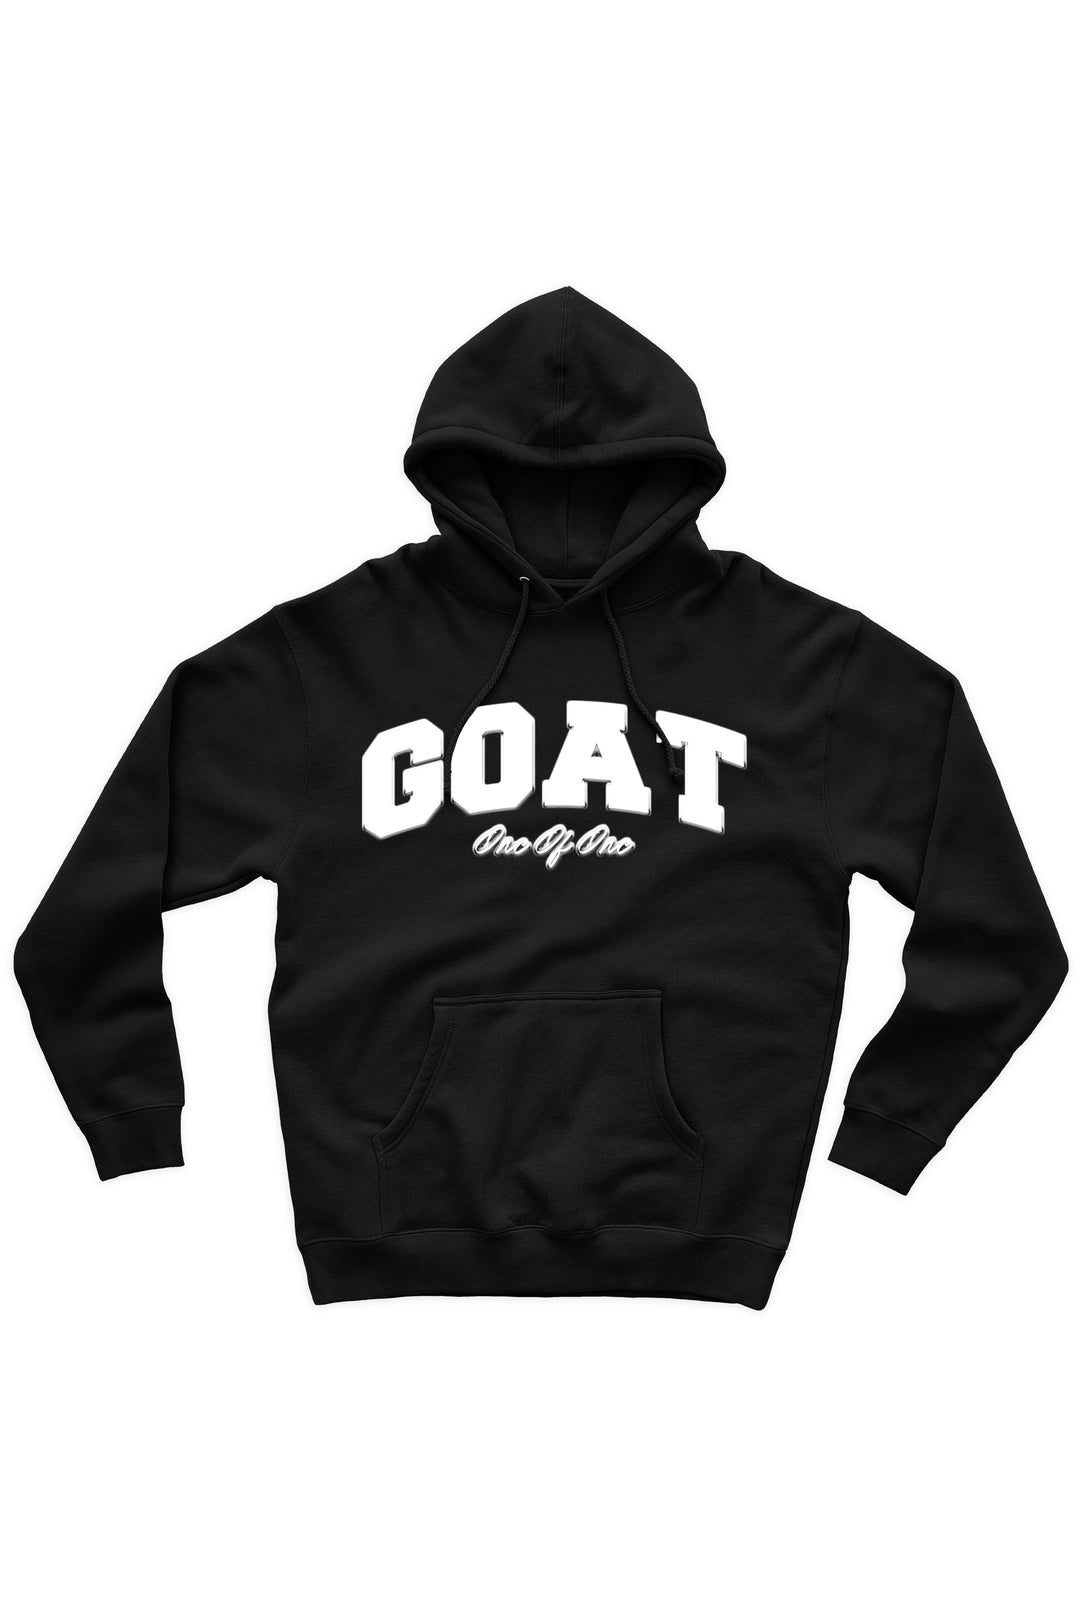 Puff Print Goat Hoodie (White Logo) - Zamage